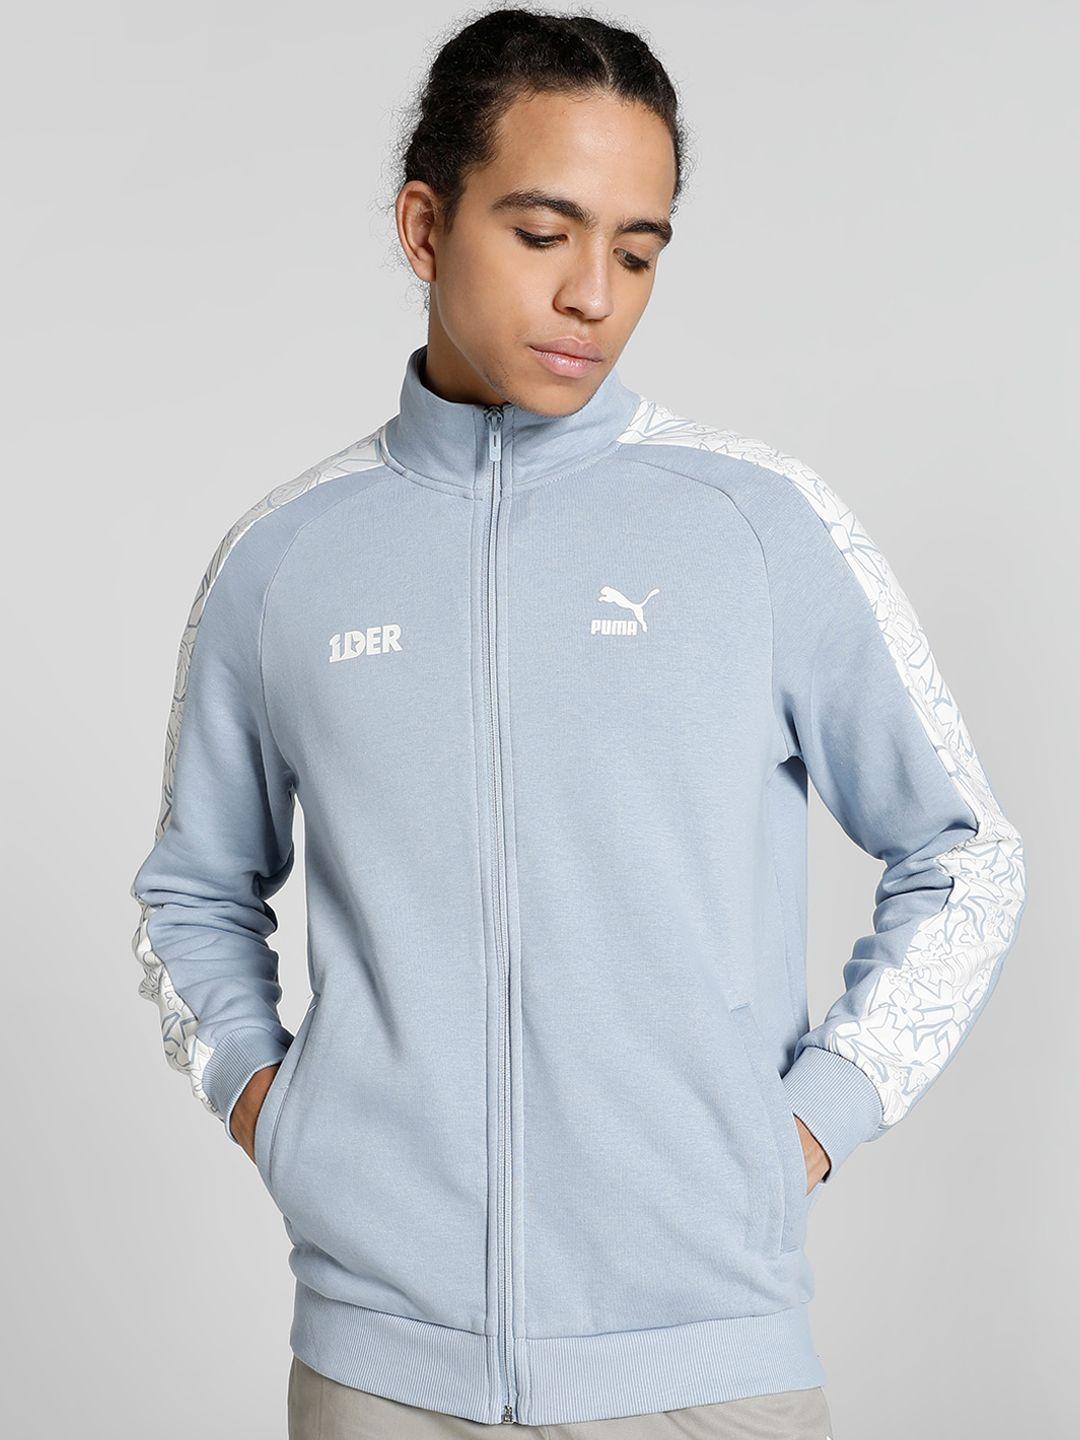 puma x 1der men feelgood logo printed cotton sporty jacket